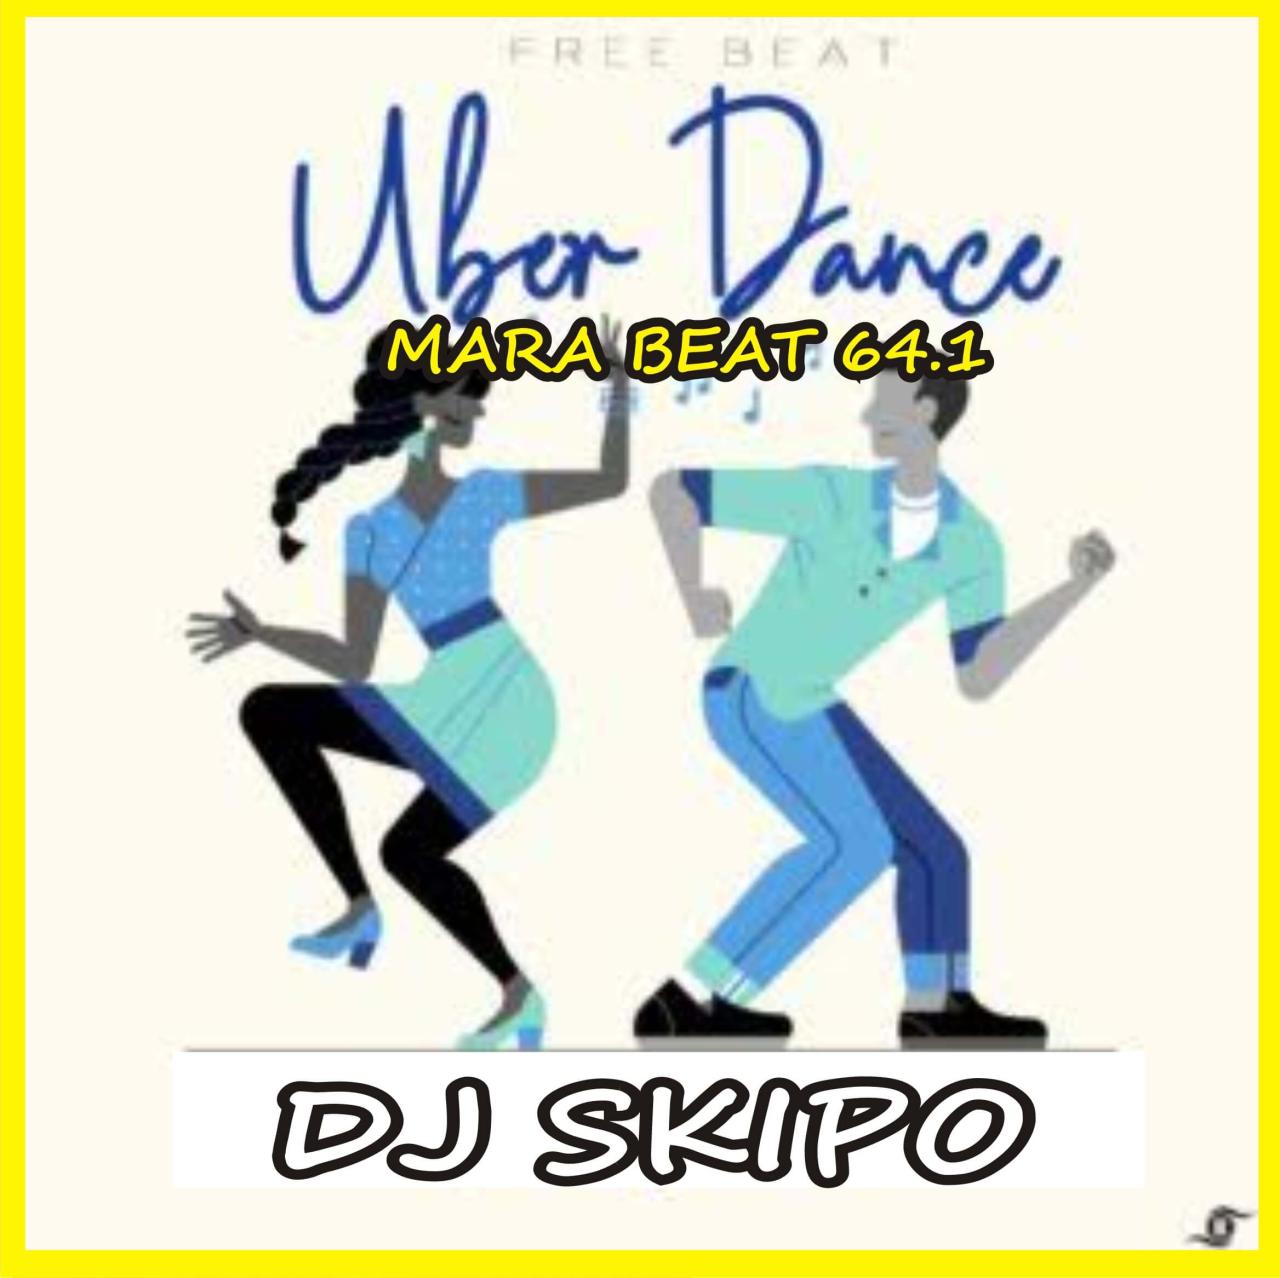 DJ Skipo Ulber Dance Mara 64.1 Freebeat